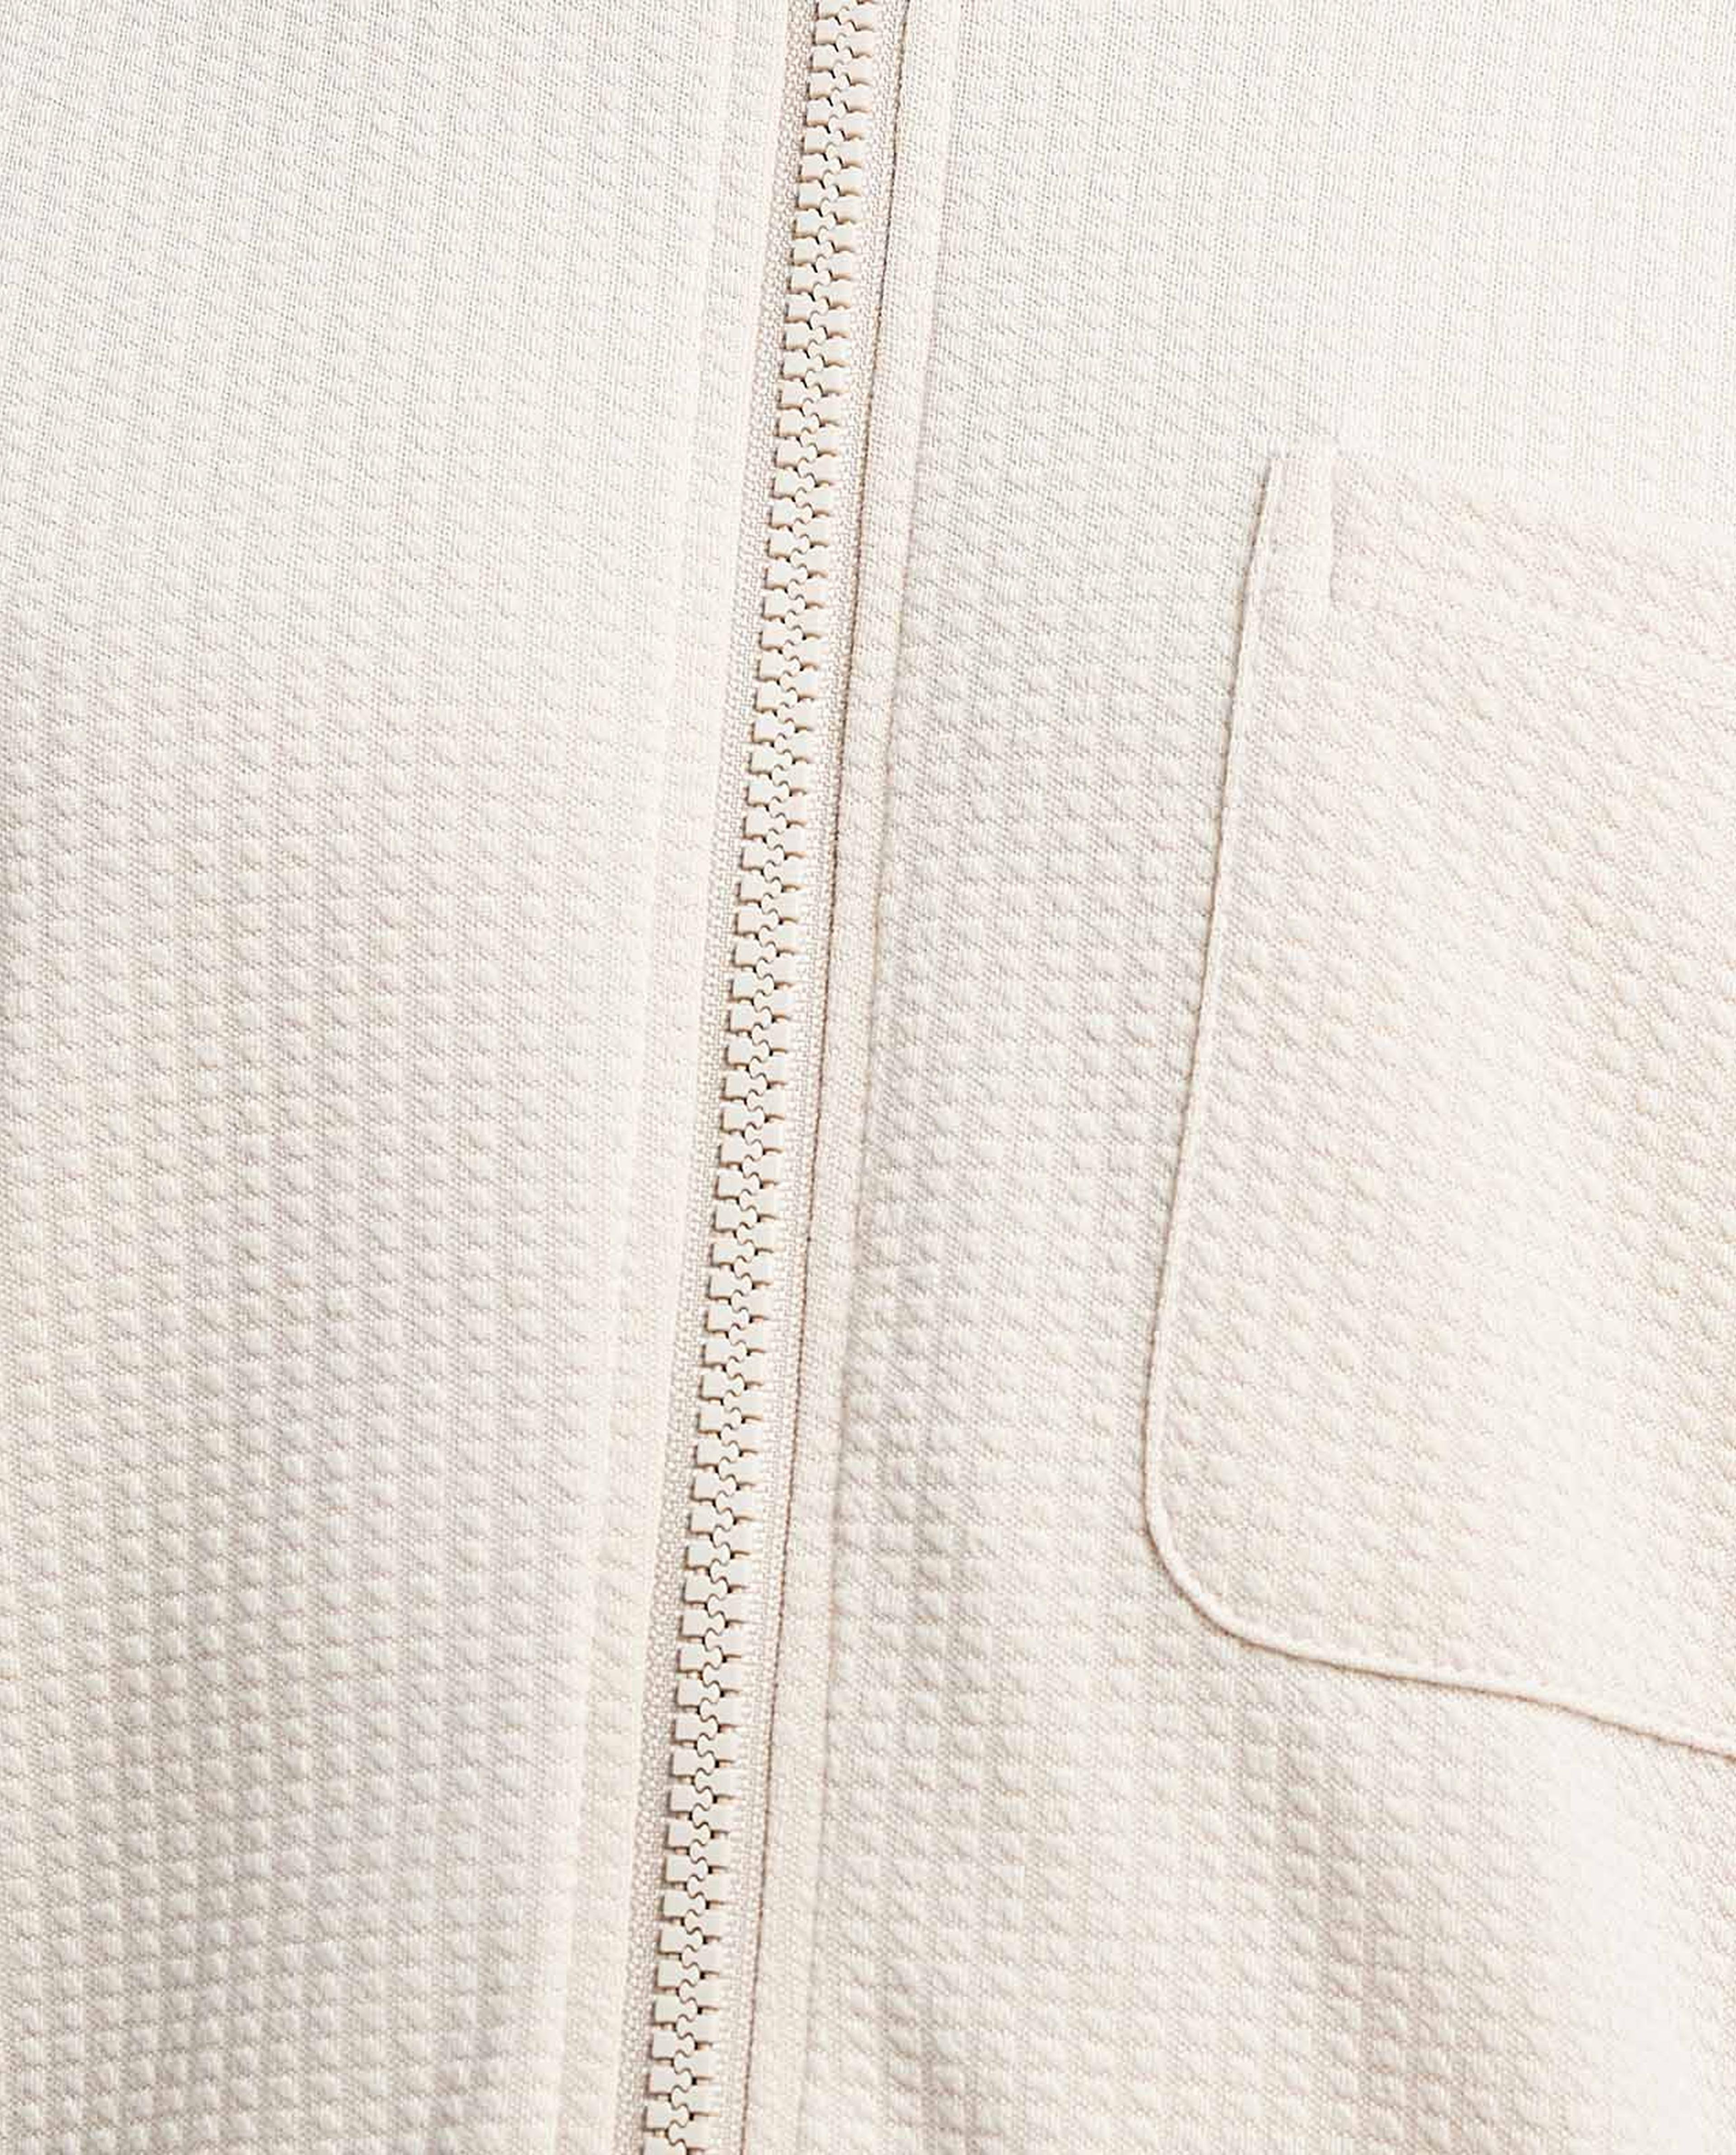 Textured Jacket with Zipper Closure